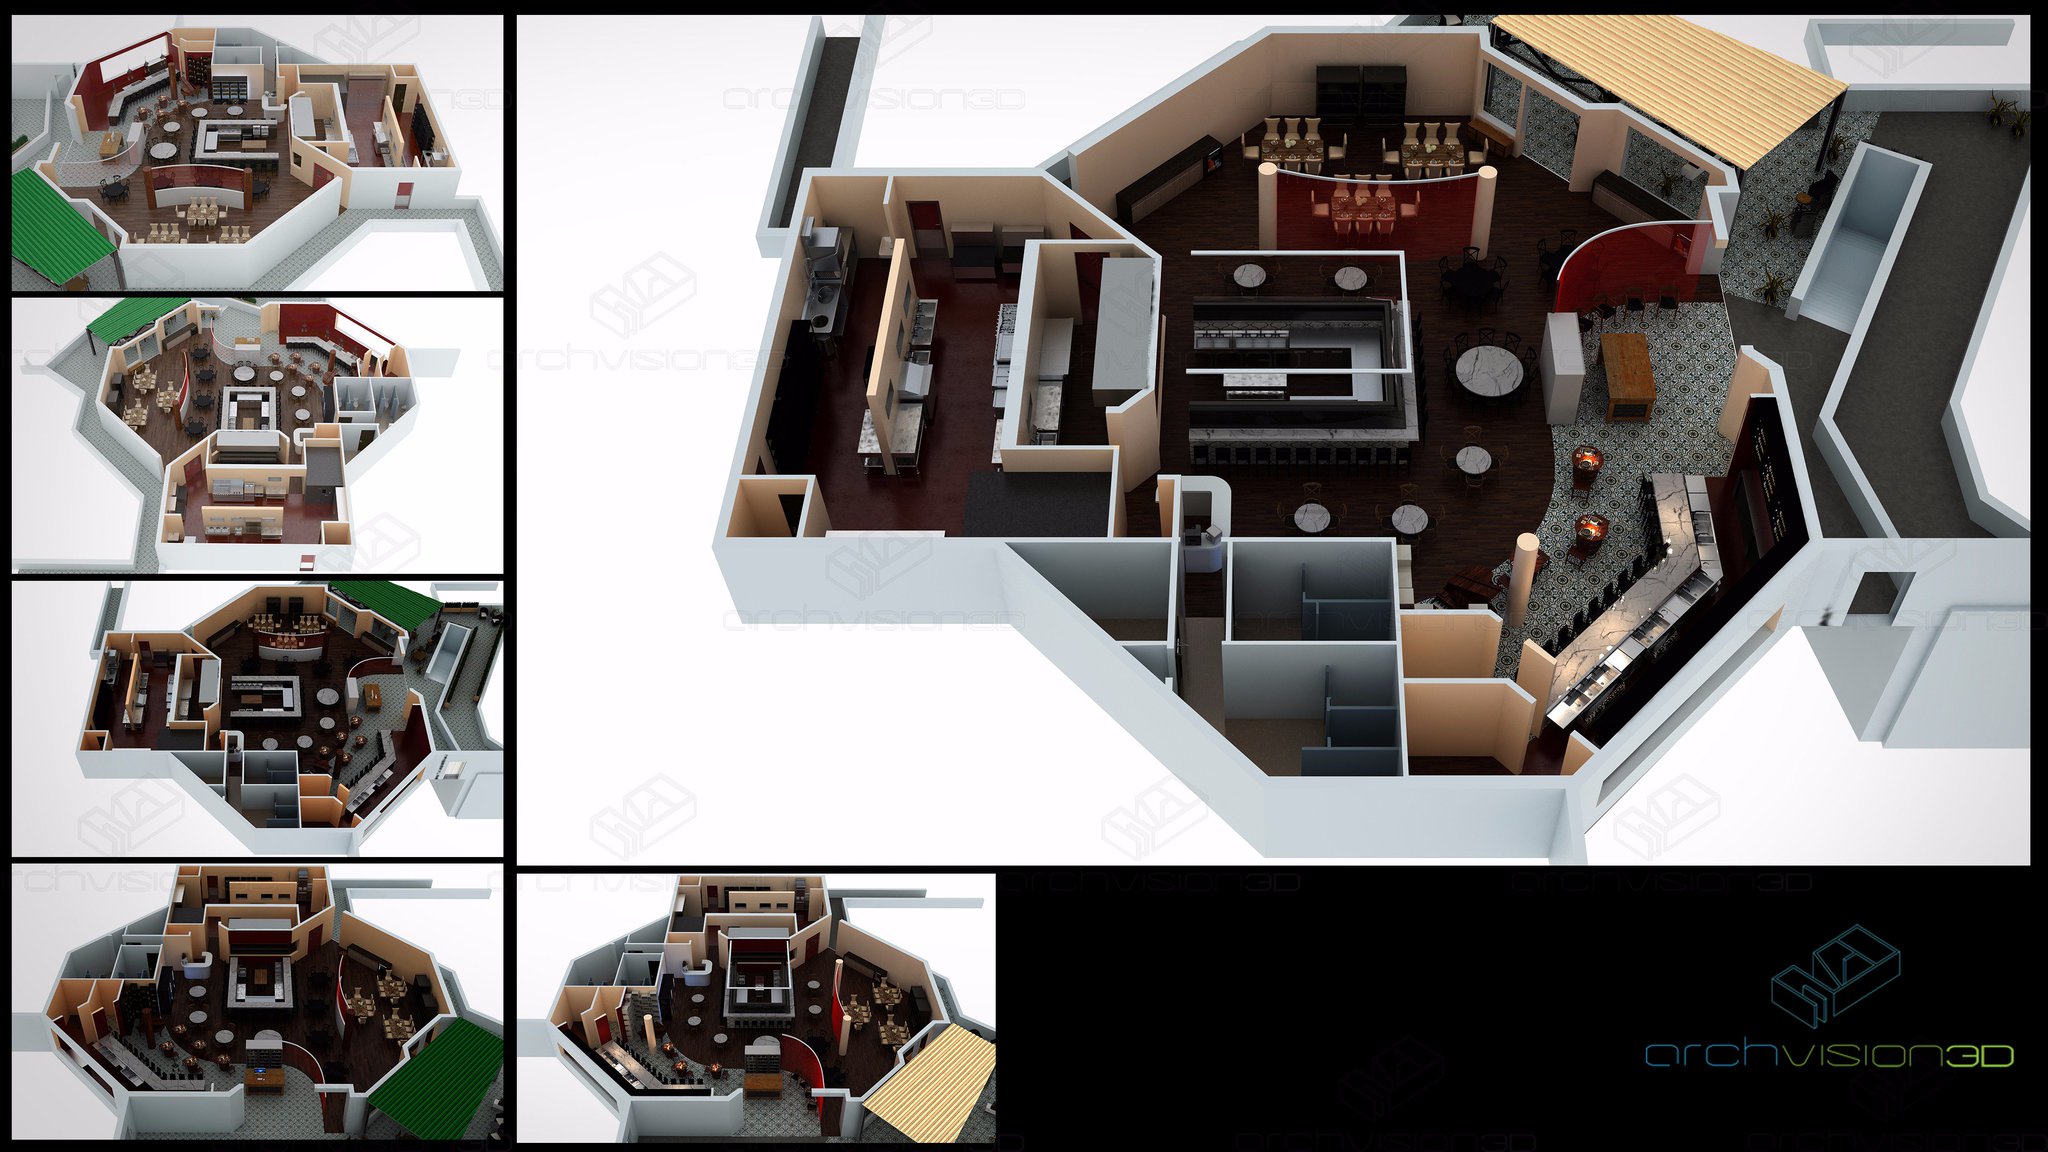 ARCHVISION 3D on Twitter "3D floorplan of a restaurant interior exterior architecture